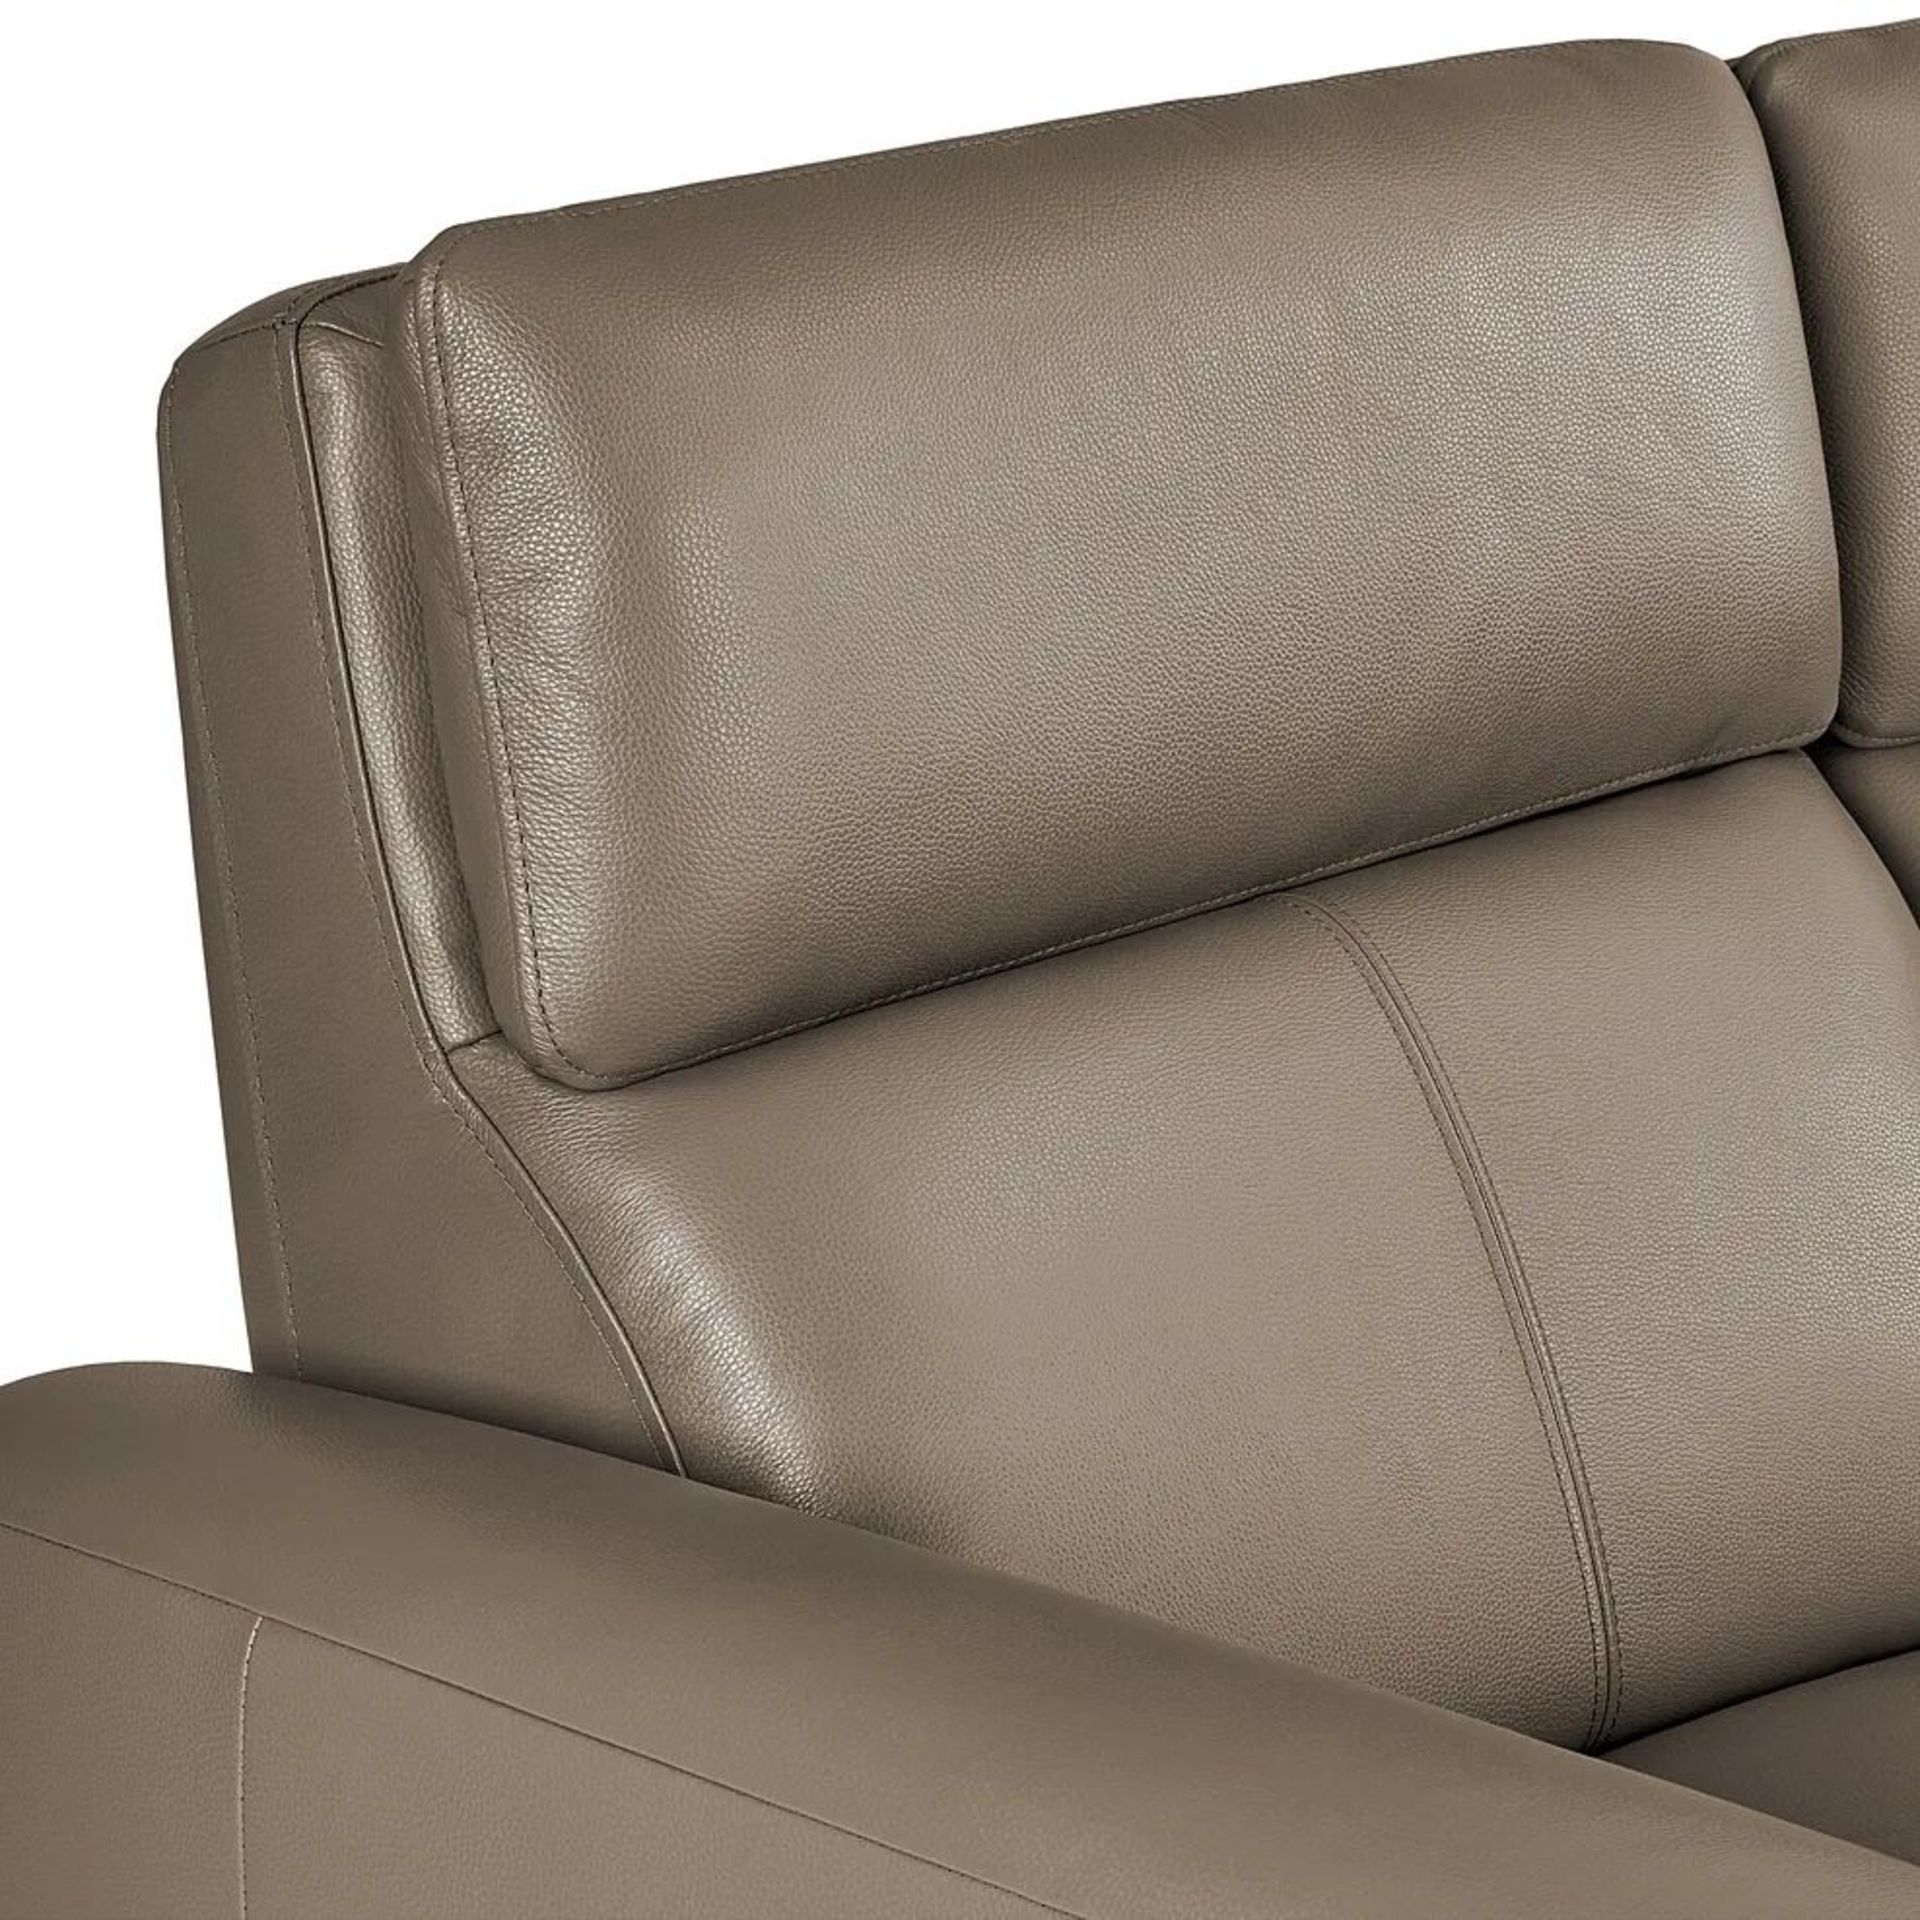 BRAND NEW SAMSON Modular 2 Seat Static Sofa - BEIGE LEATHER. RRP £1200. Showcasing neat, modern - Image 3 of 4